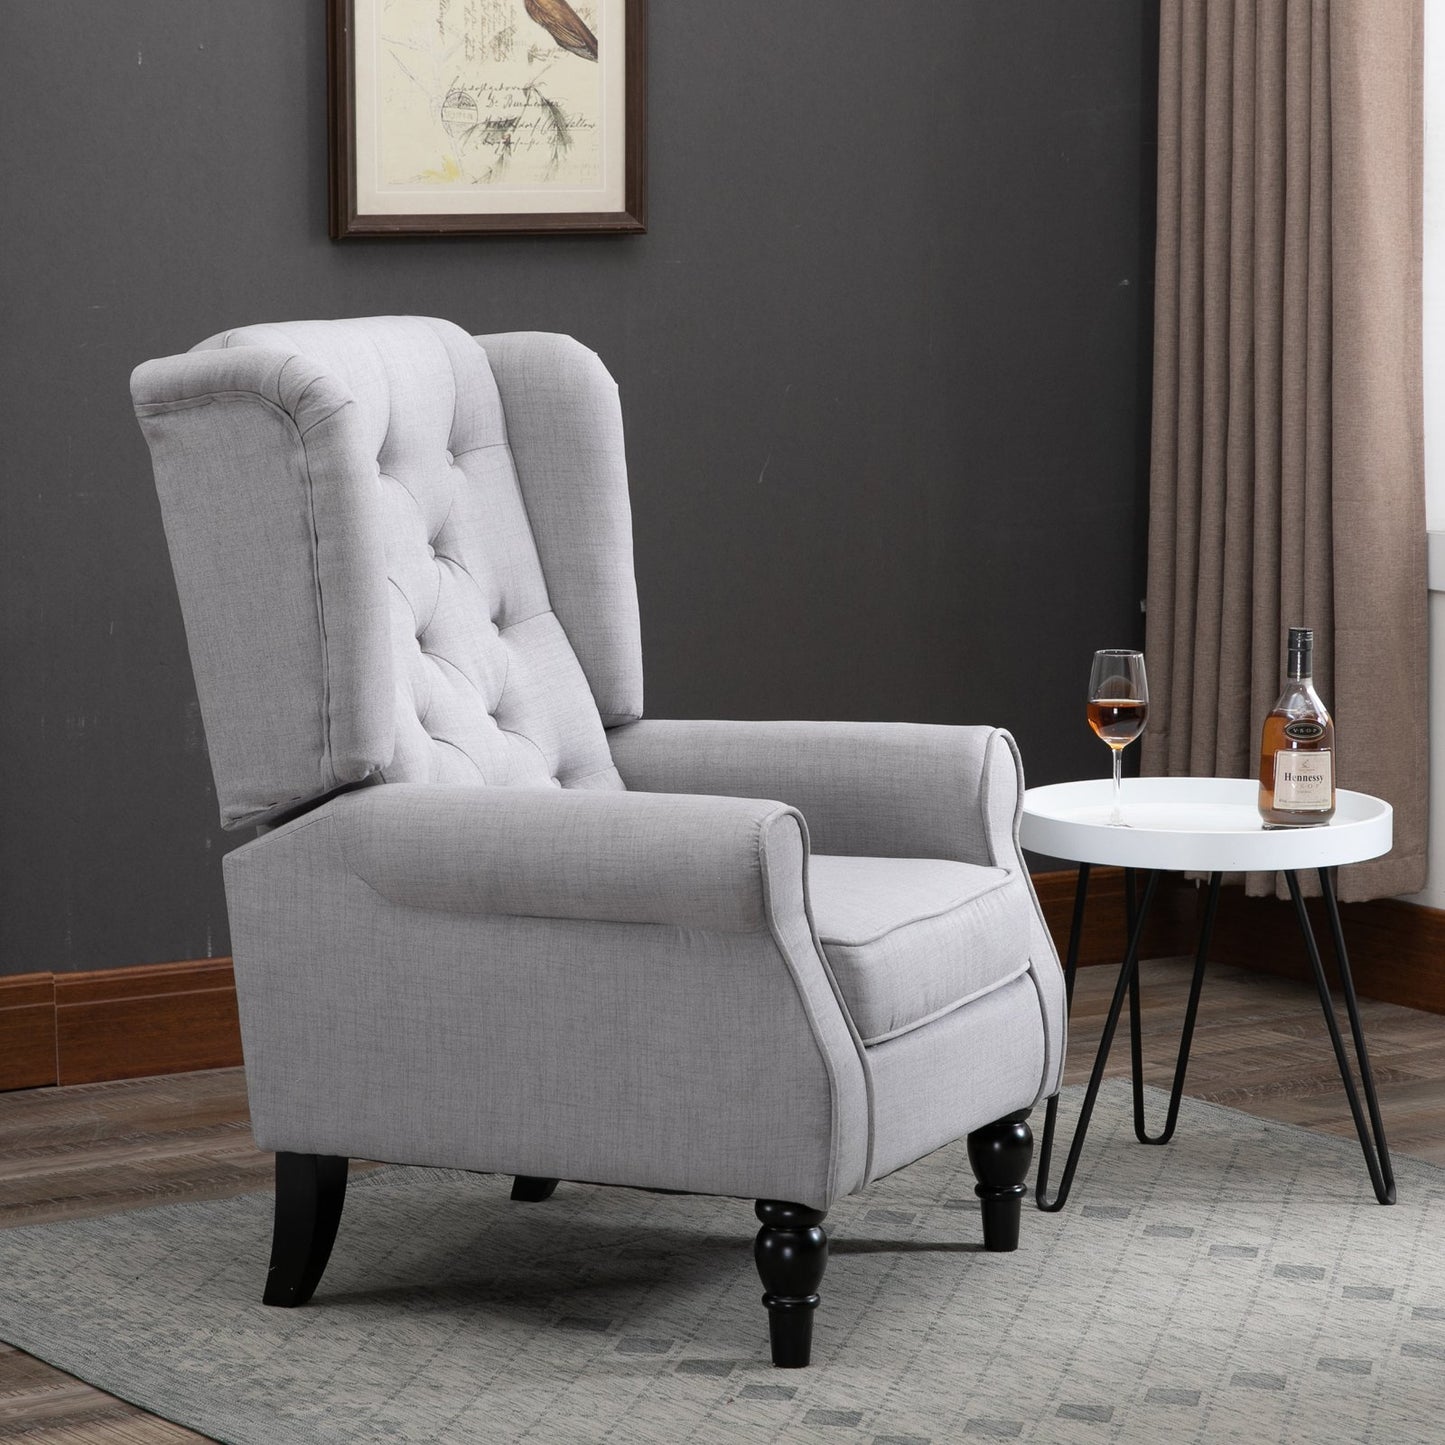 HOMCOM Fabric Tufted Accent Armchair Sofa Studio Couch Grey